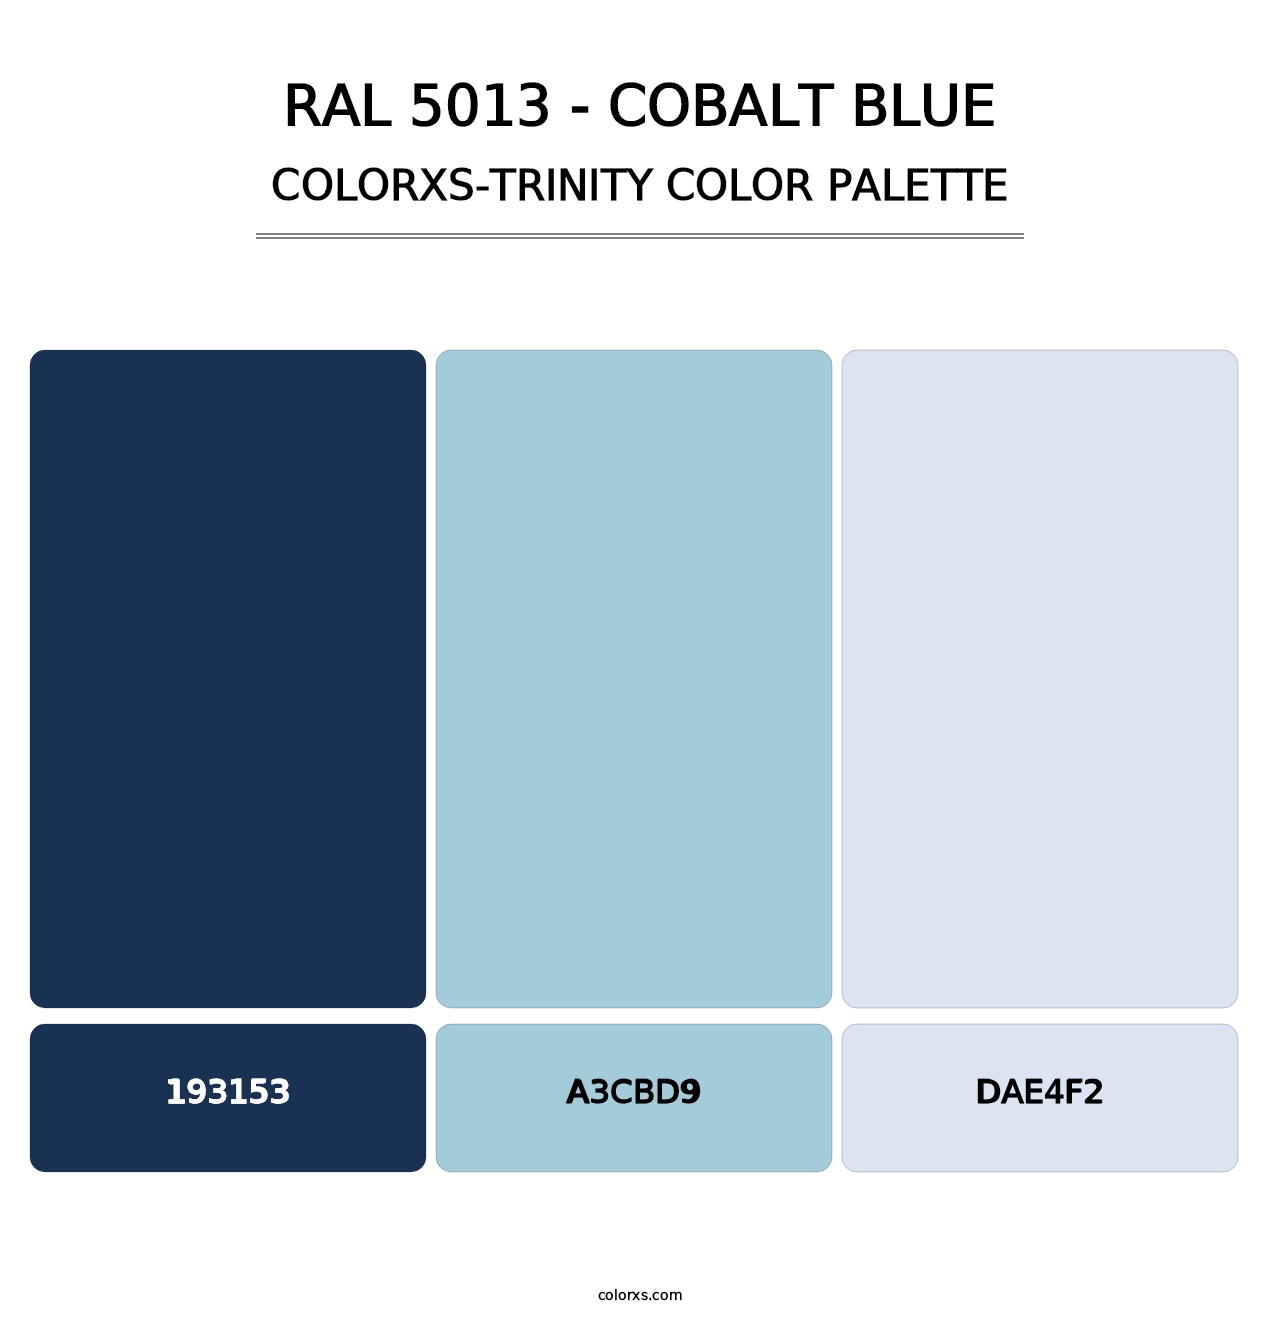 RAL 5013 - Cobalt Blue - Colorxs Trinity Palette